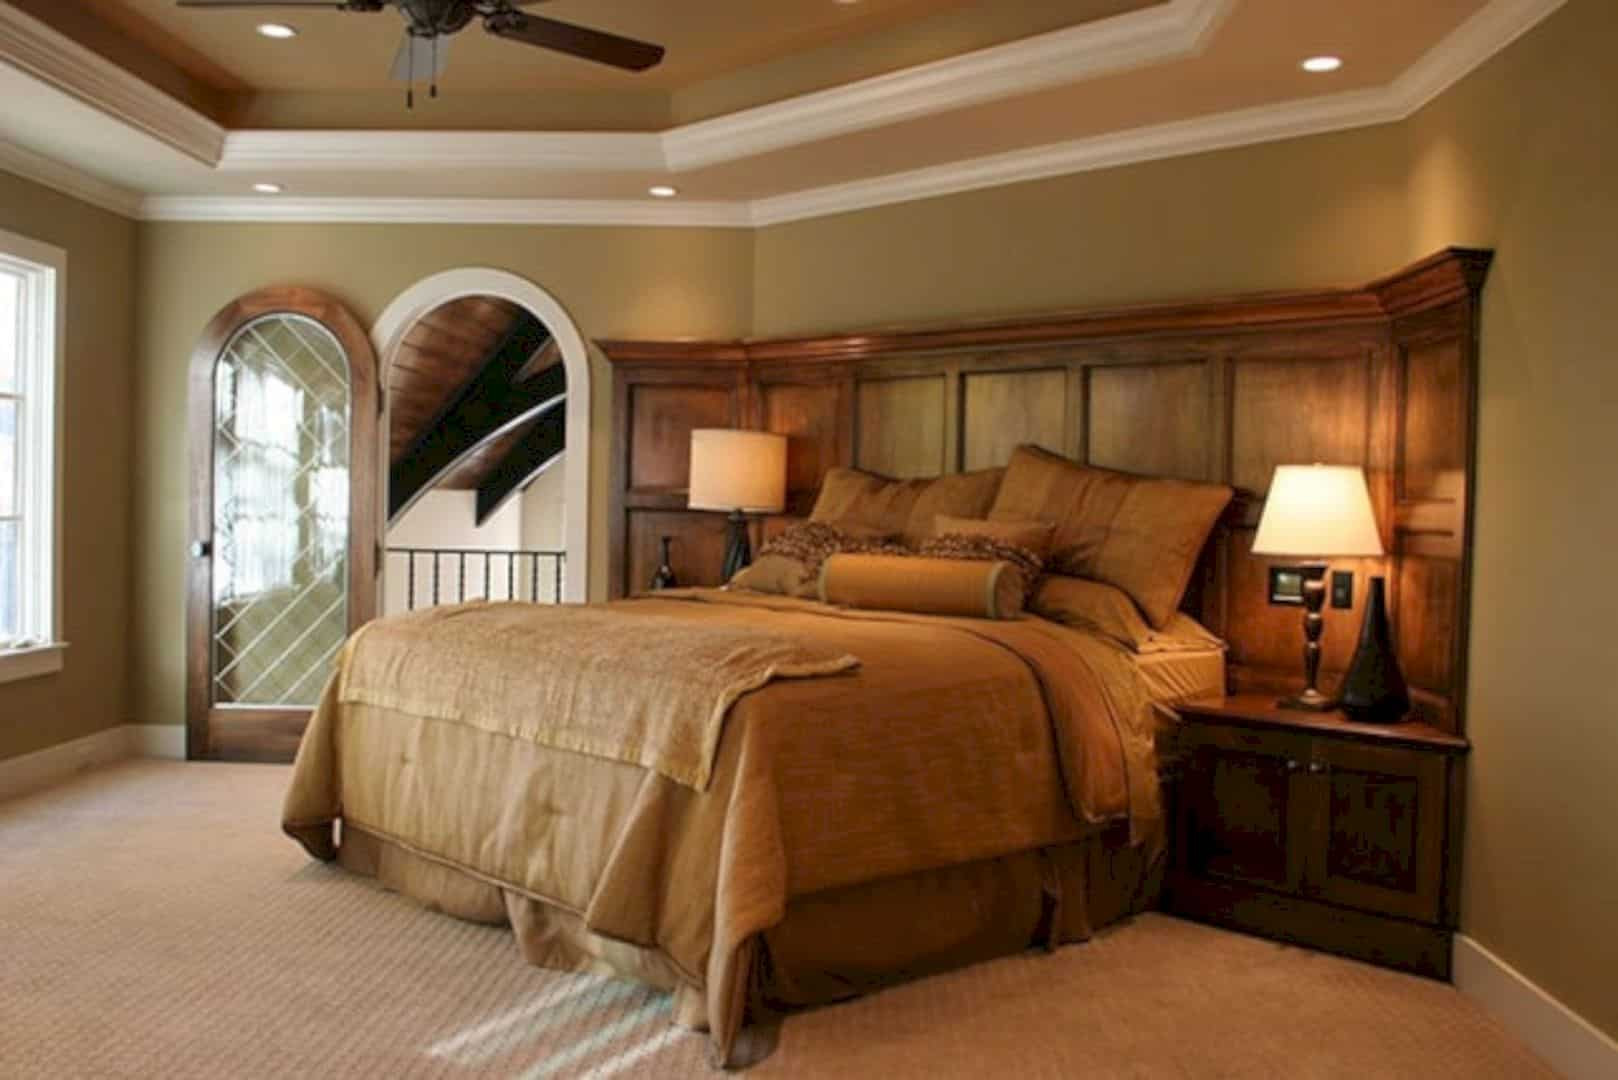 Rustic Bedroom Designs
 16 Classy Rustic Bedroom Designs